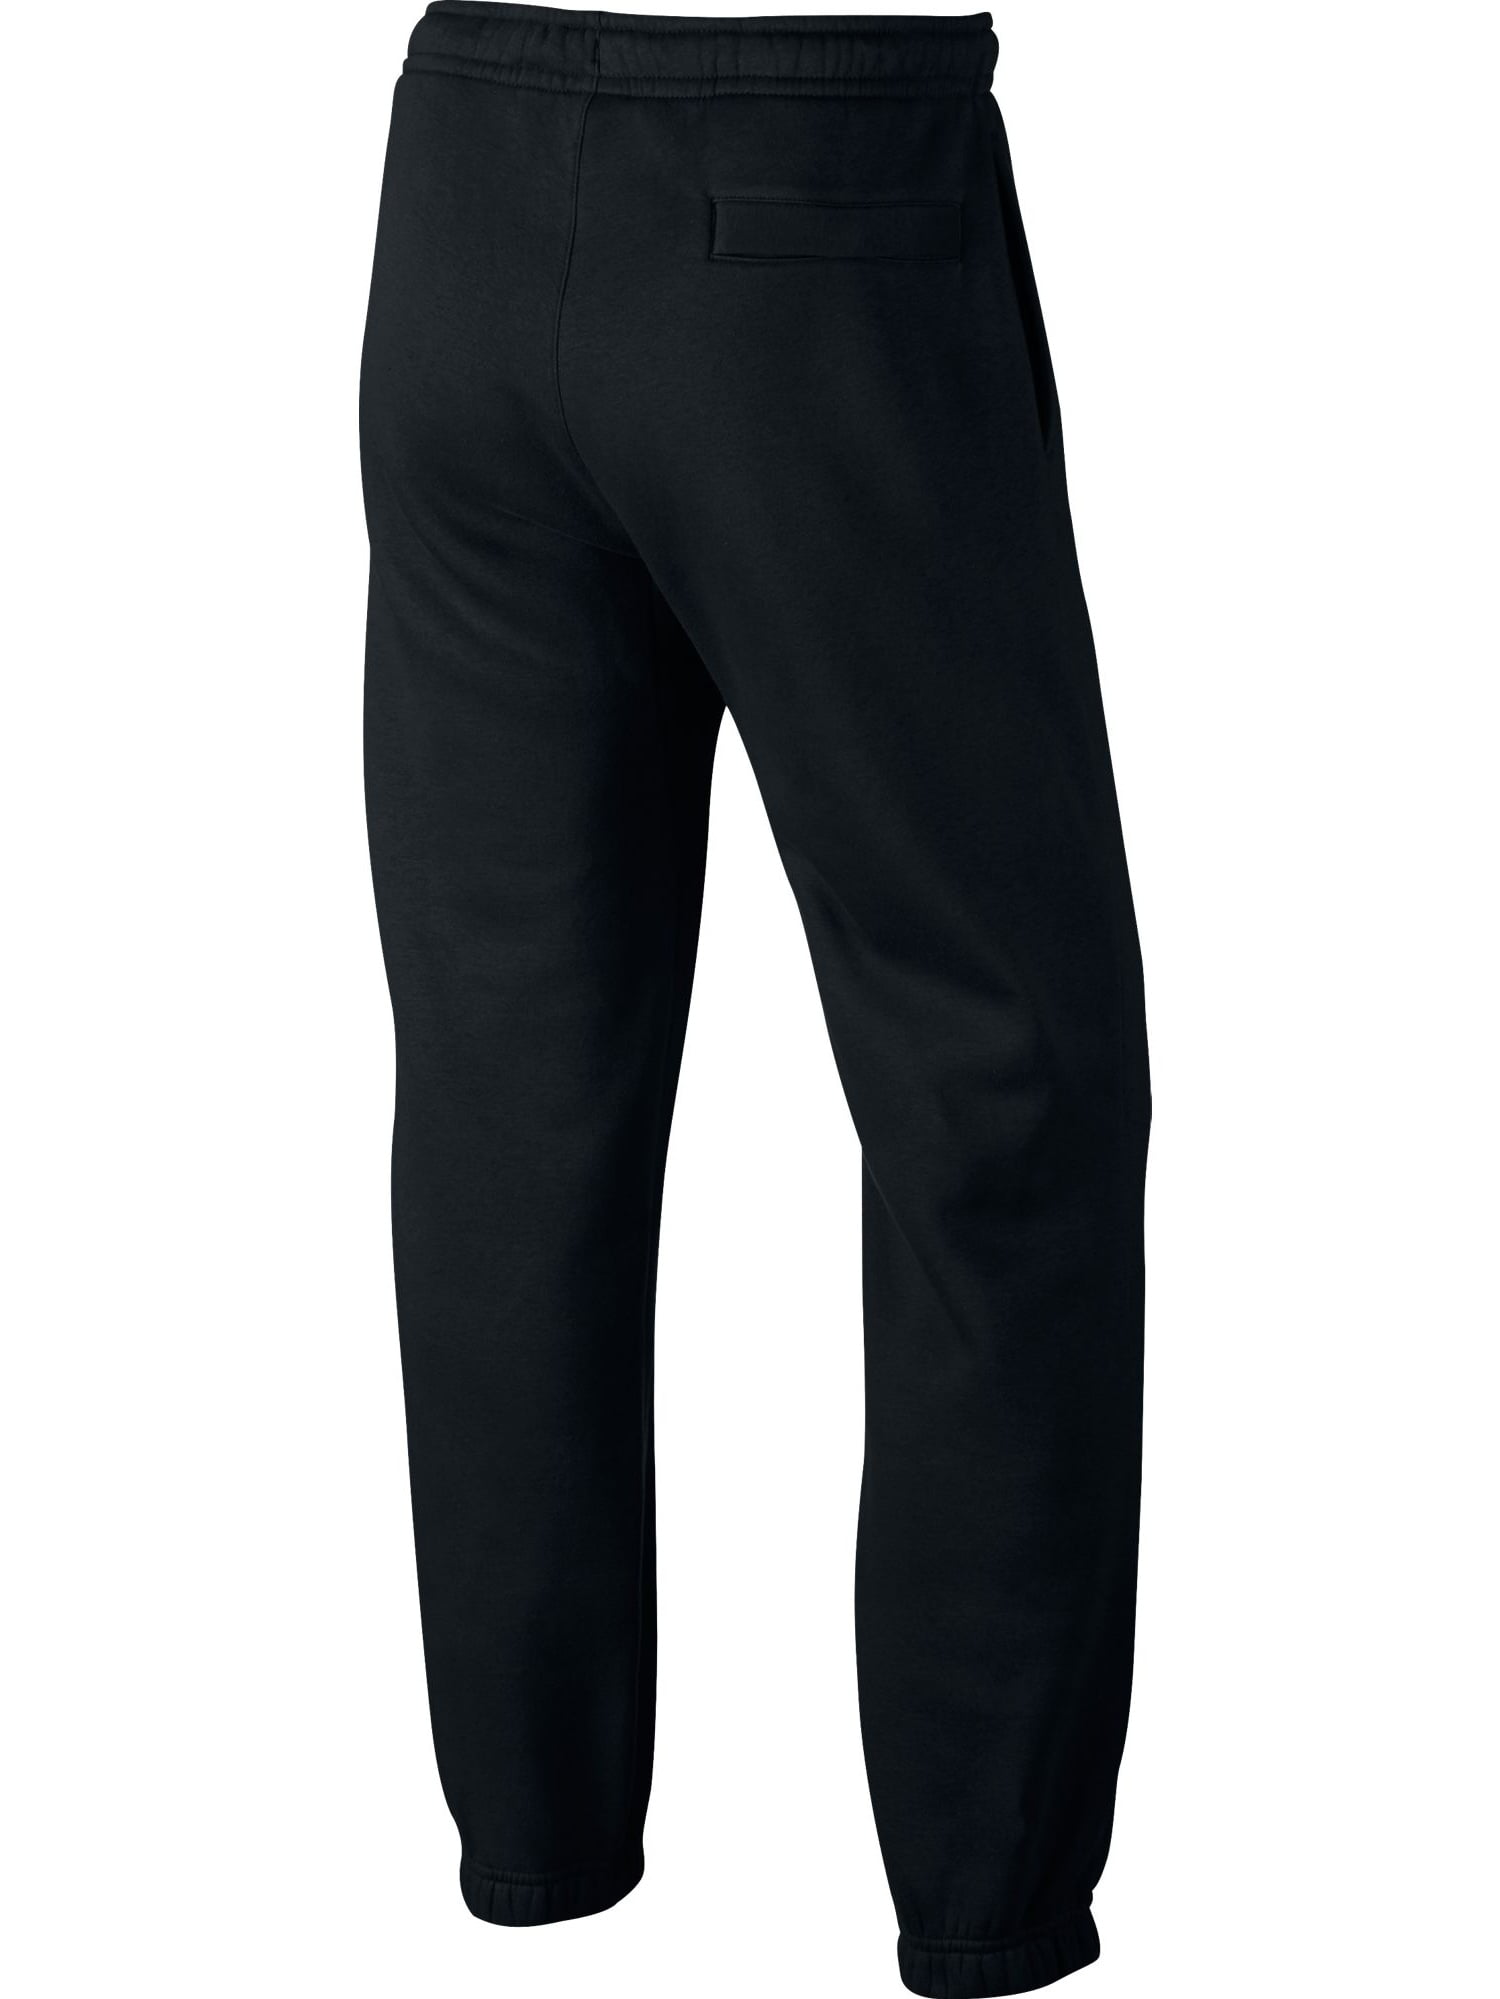 Nike Sportswear Club Athleisure Casual Sports Drawstring Long Pants 'Black'  - 804400-010